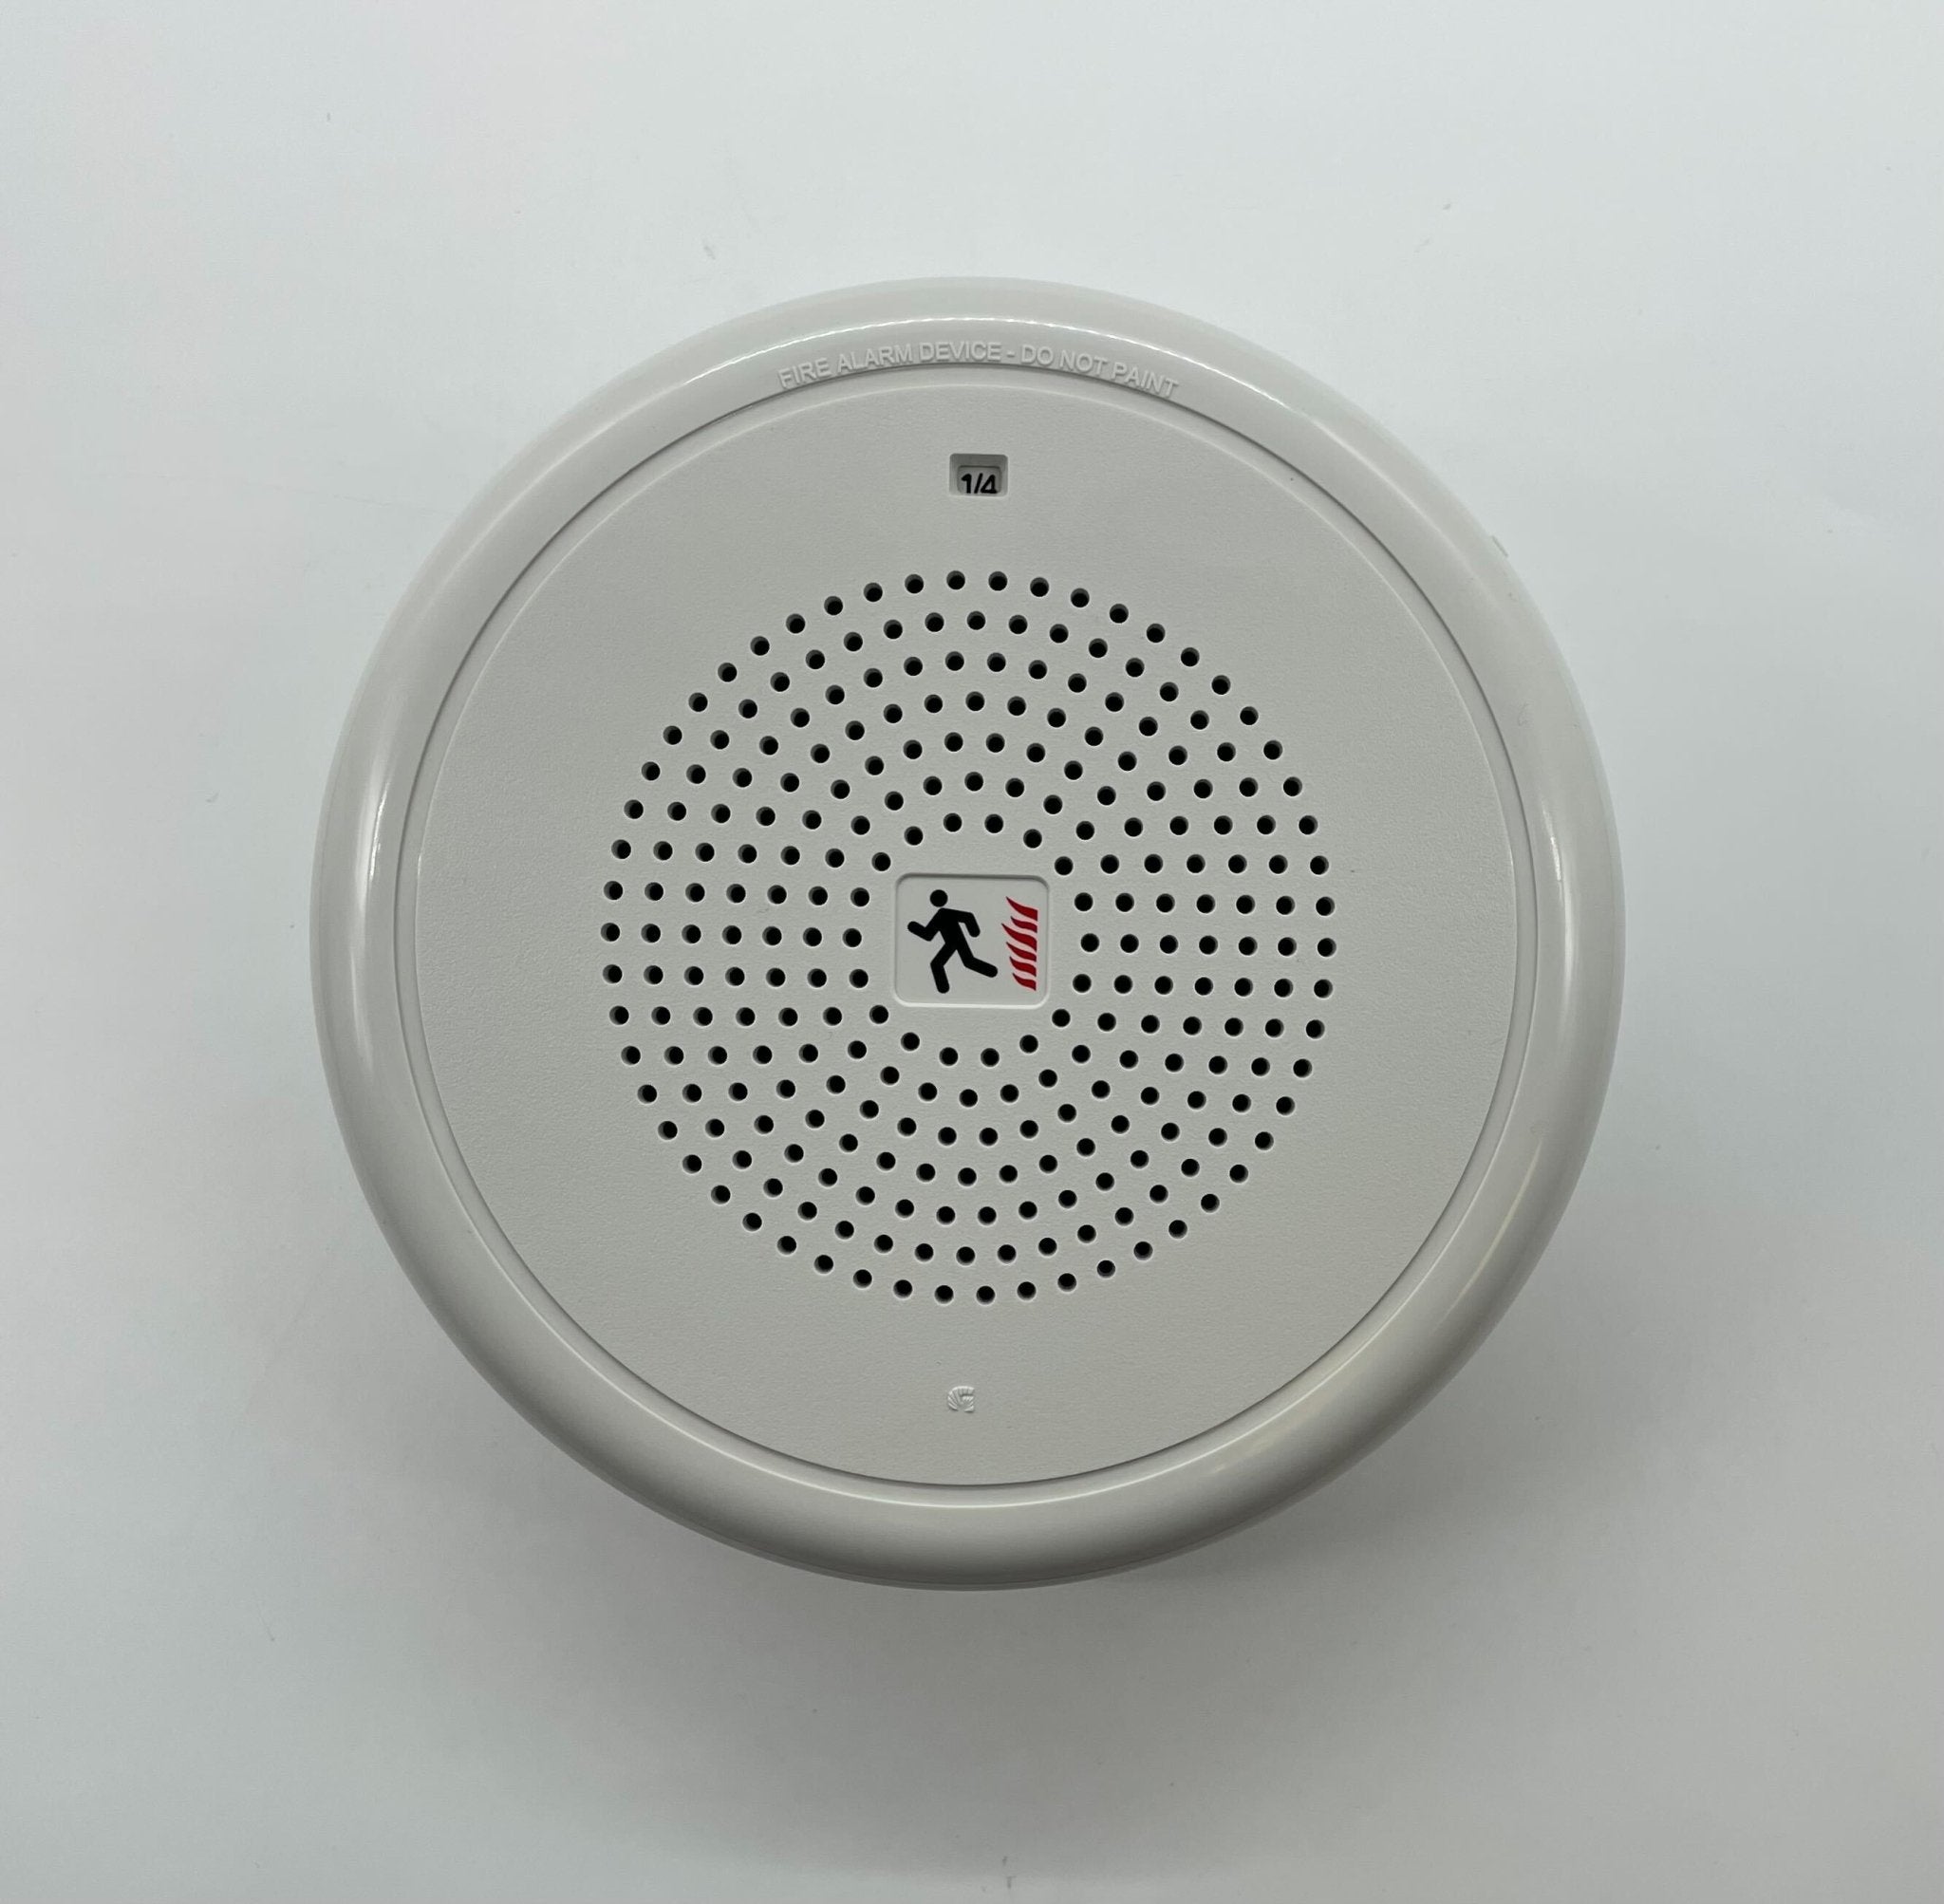 Edwards GCHFWN-S7 - The Fire Alarm Supplier